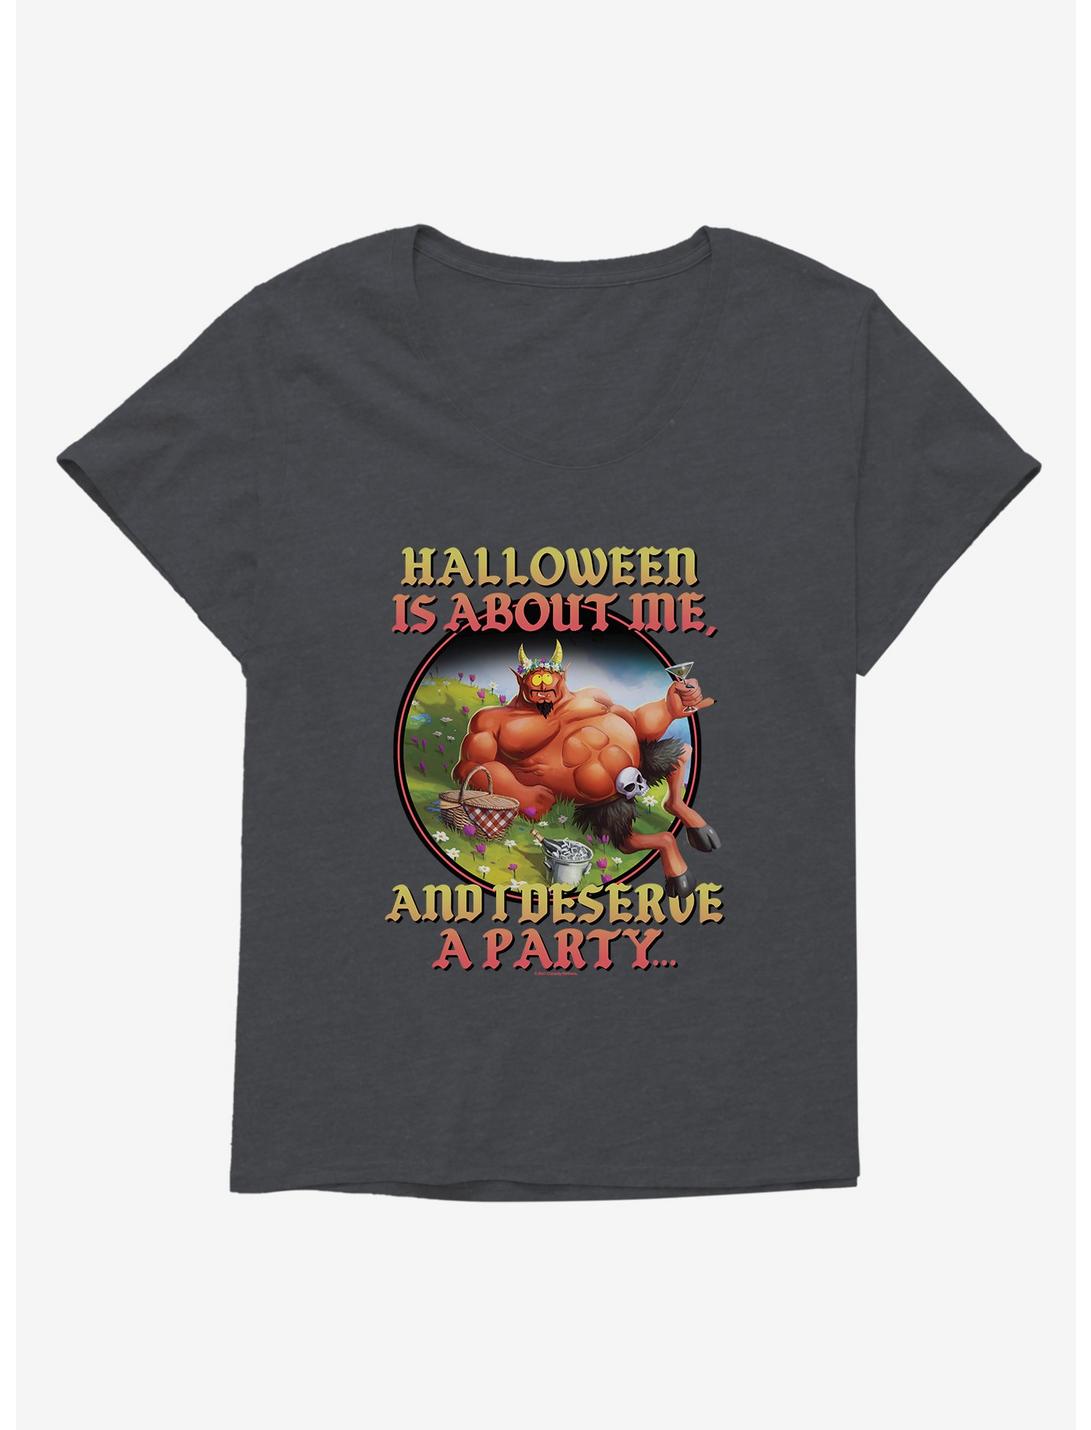 South Park Halloween About Me Girls T-Shirt Plus Size, , hi-res